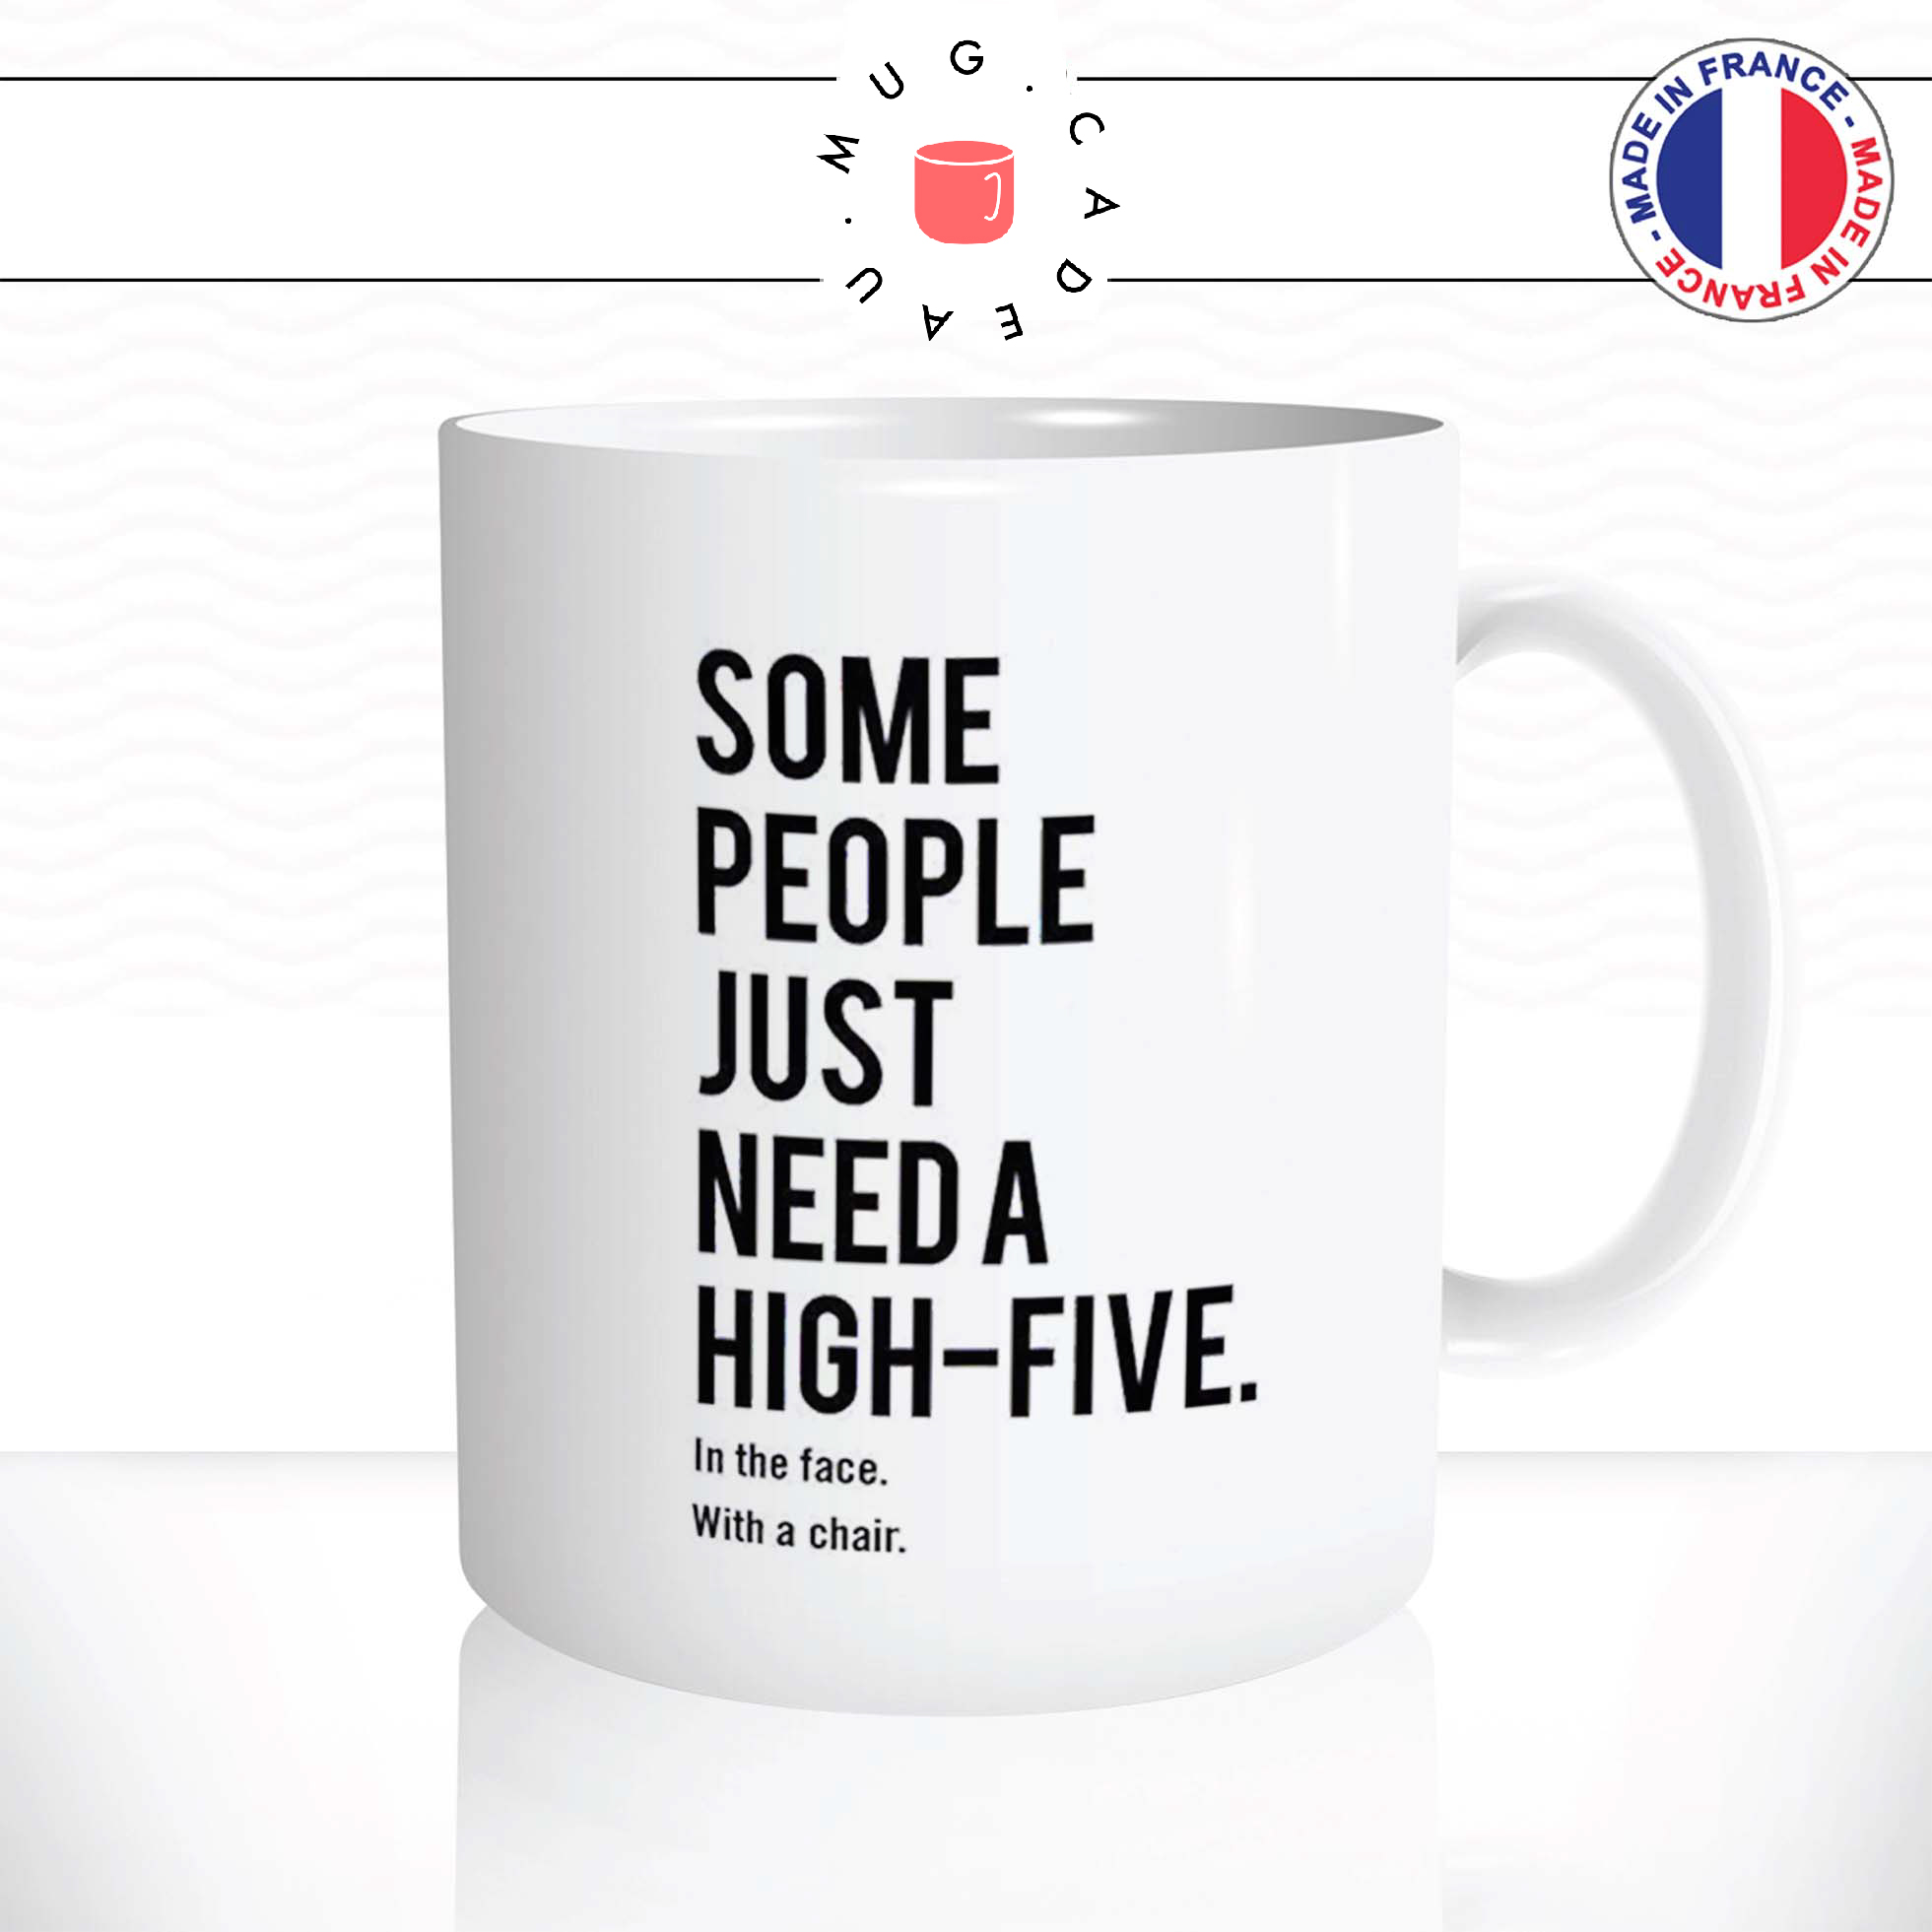 mug-tasse-ref19-citation-drole-humour-people-high-five-cafe-the-mugs-tasses-personnalise-personnalisation-anse-droite